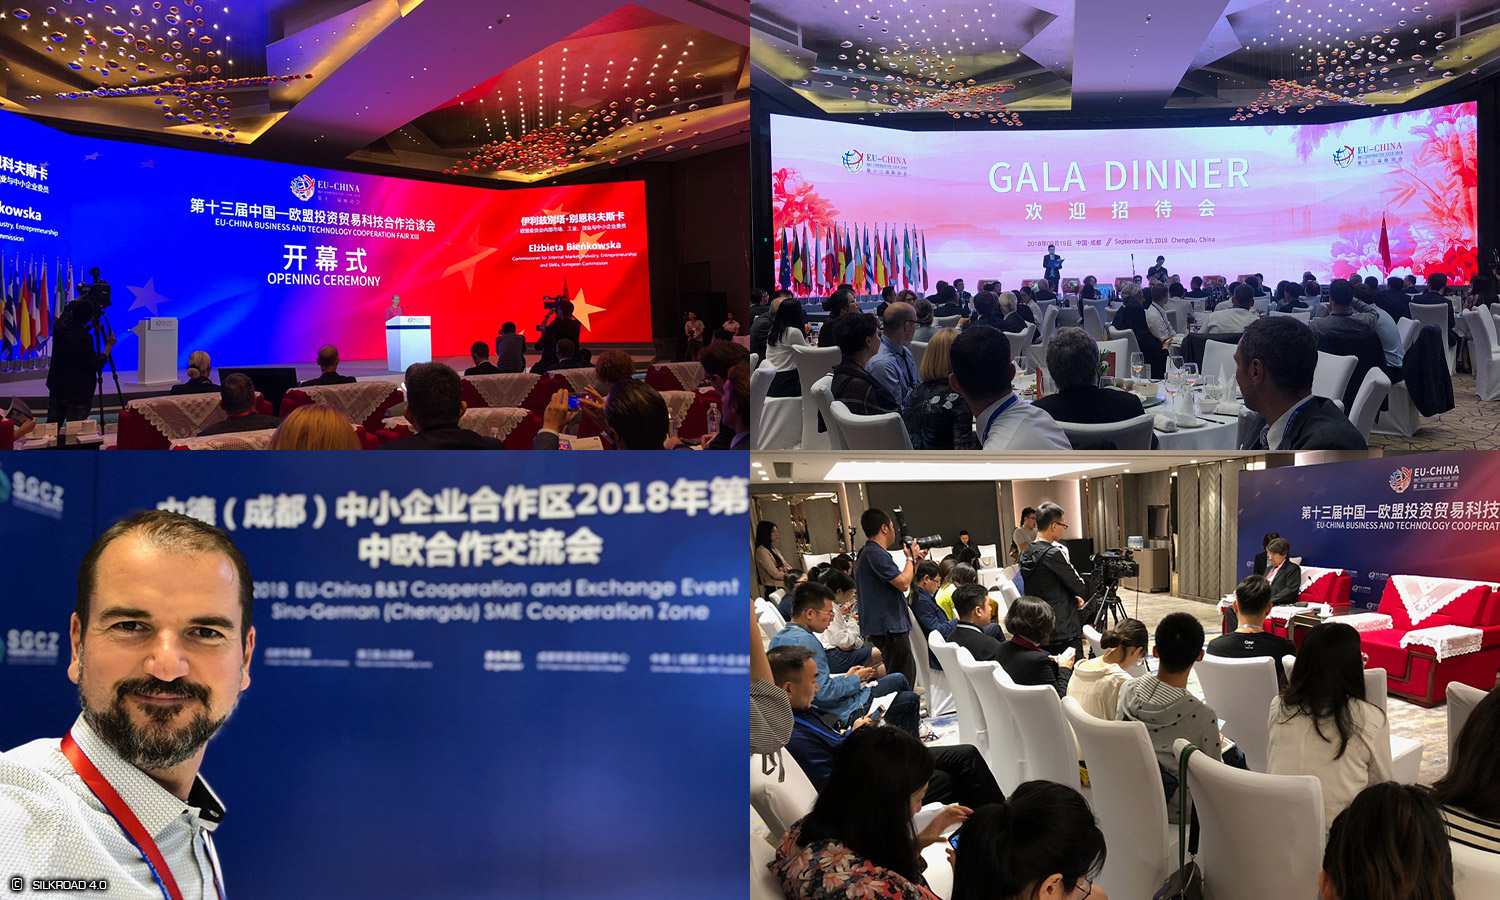 13th EU-China Business & Technology Conference, Cheng Du, China